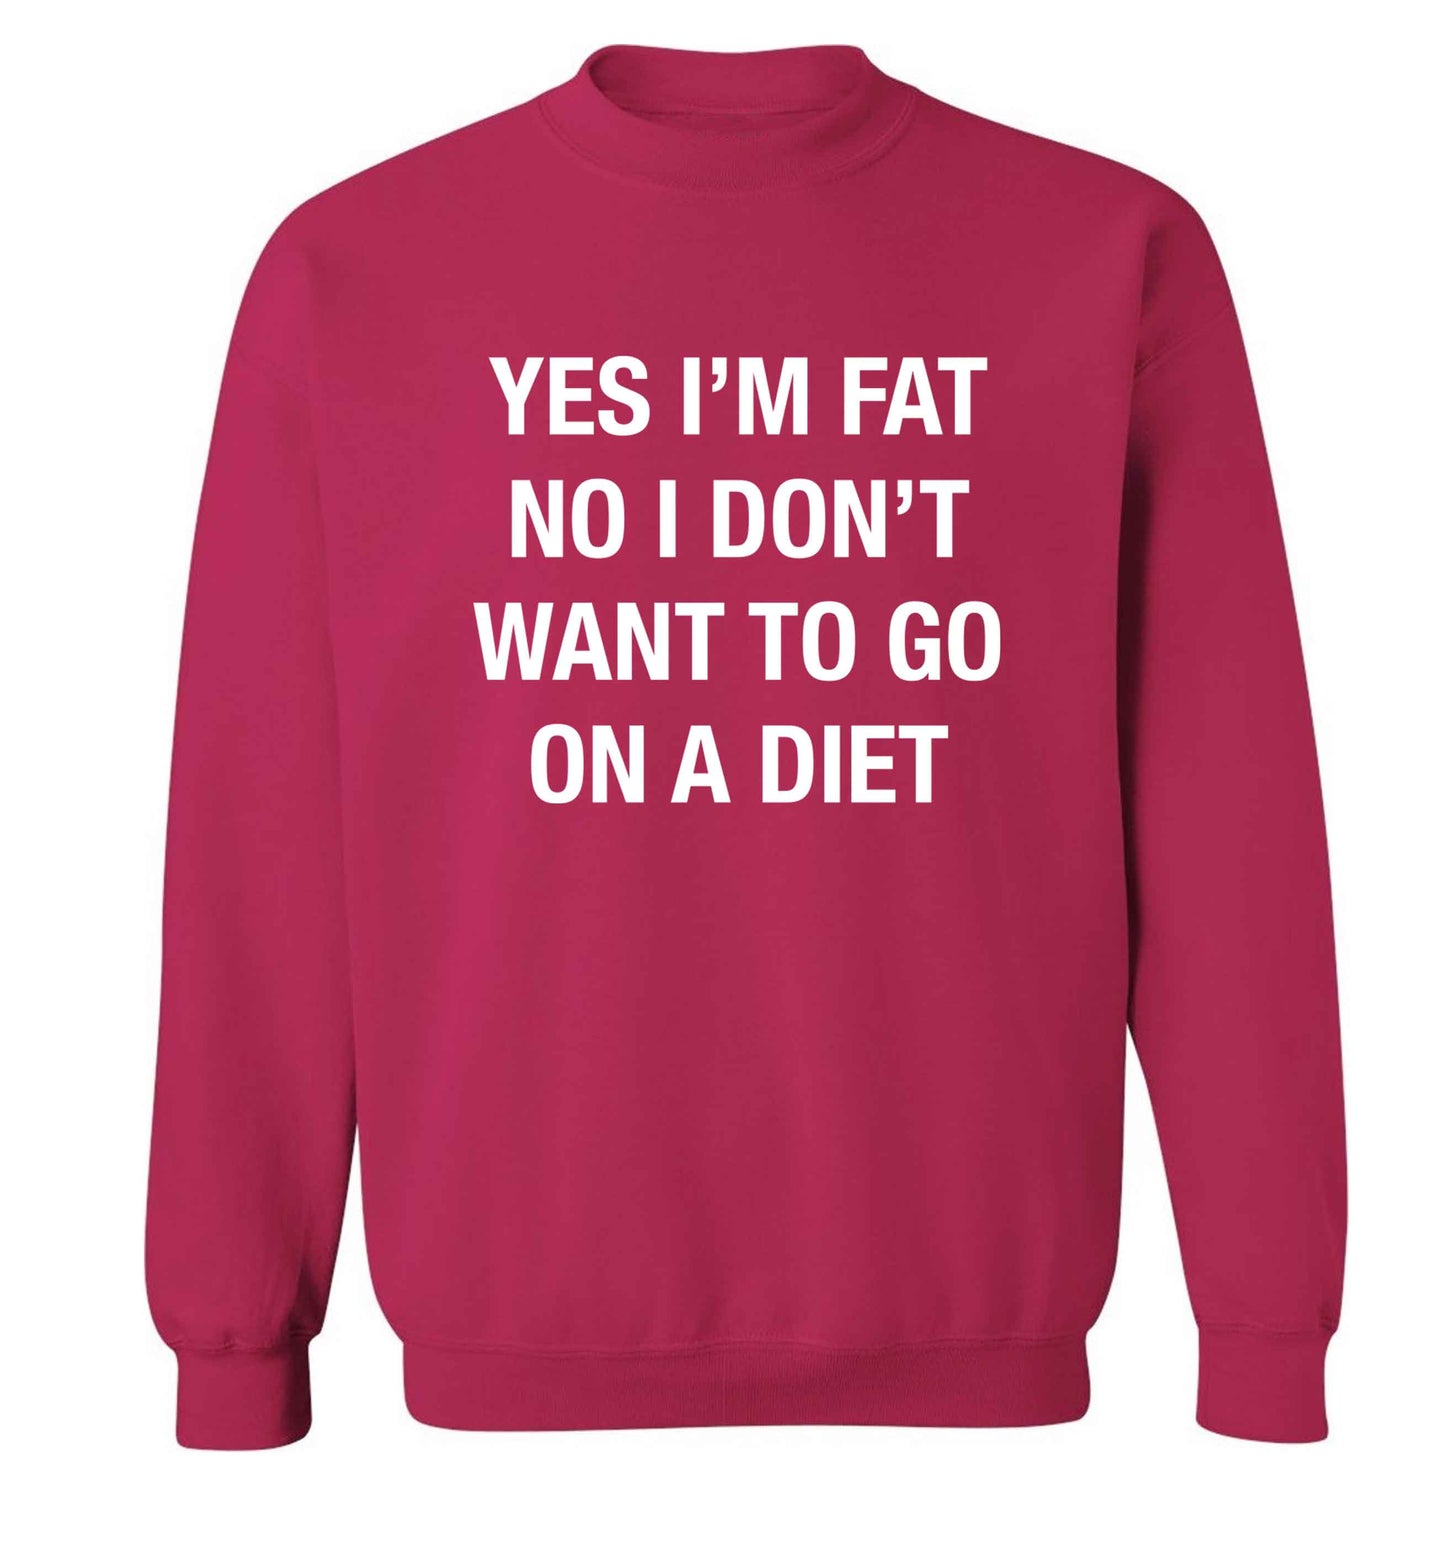 Yes I'm fat, no I don't want to go on a diet adult's unisex pink sweater 2XL